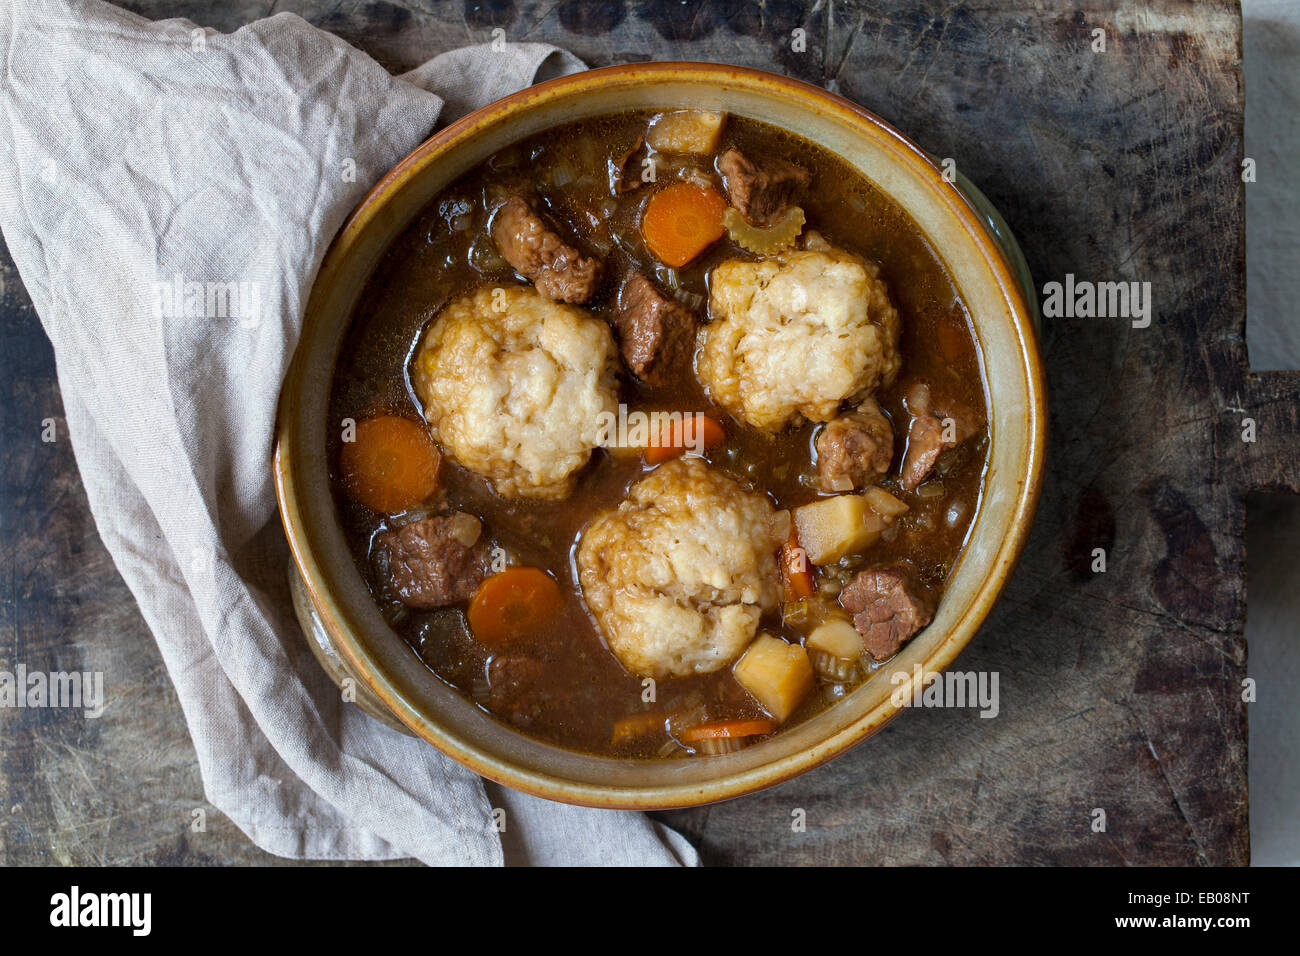 Beef stew with dumplings Stock Photo